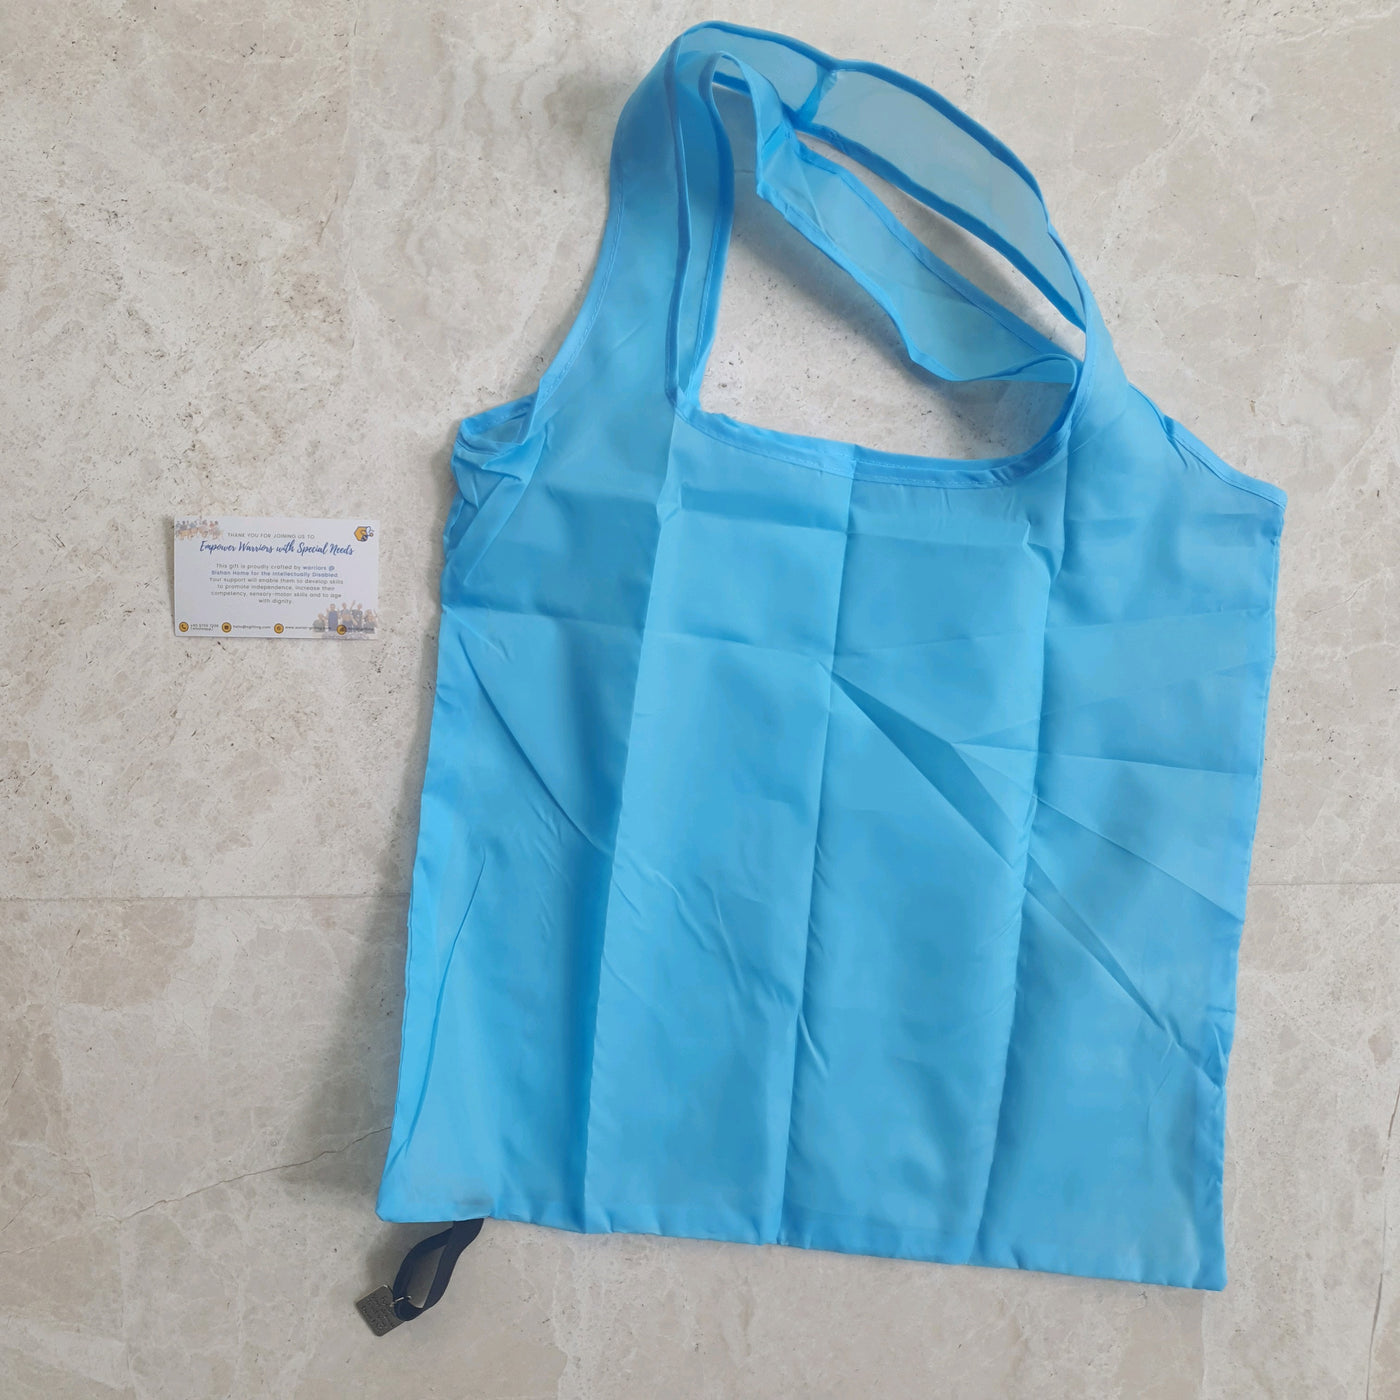 Nylon Eco Bag with Elastic Band and Motivational Charm